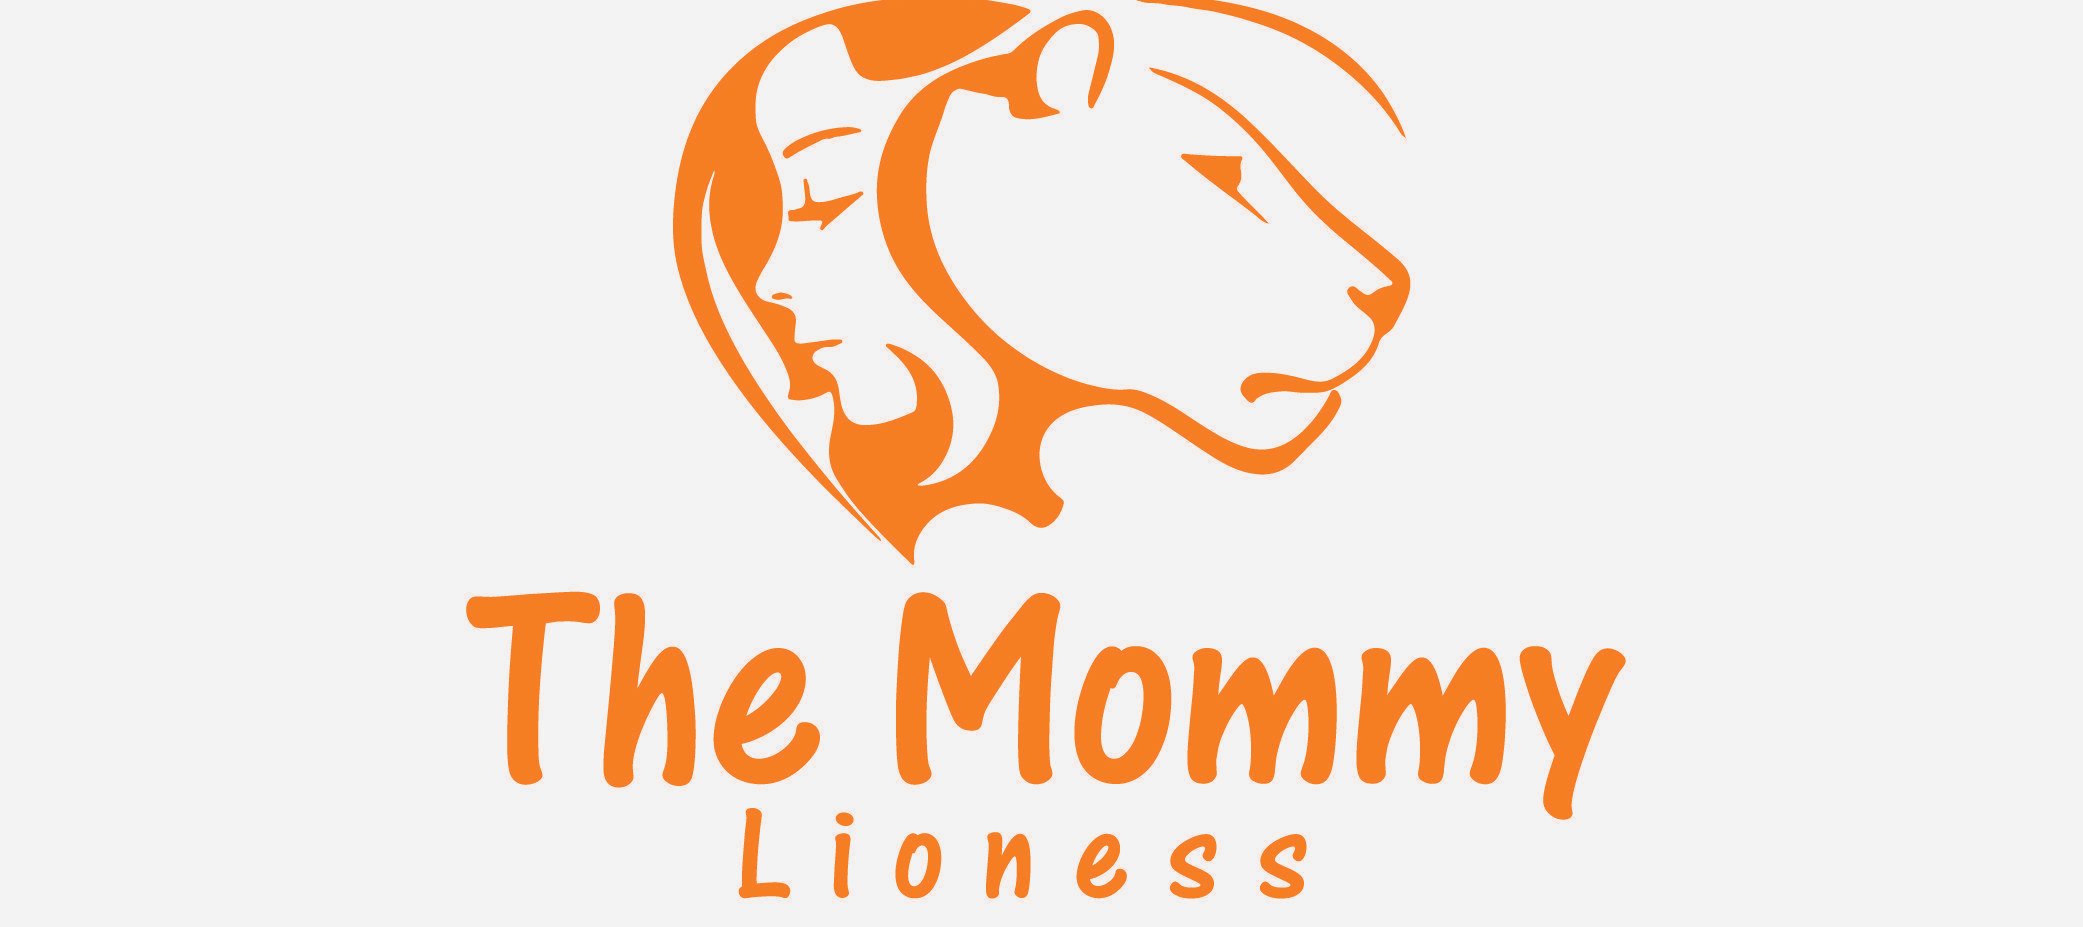 Lioness Logo - Image result for lioness logo | vitaleo voce logo | Pinterest | Logos